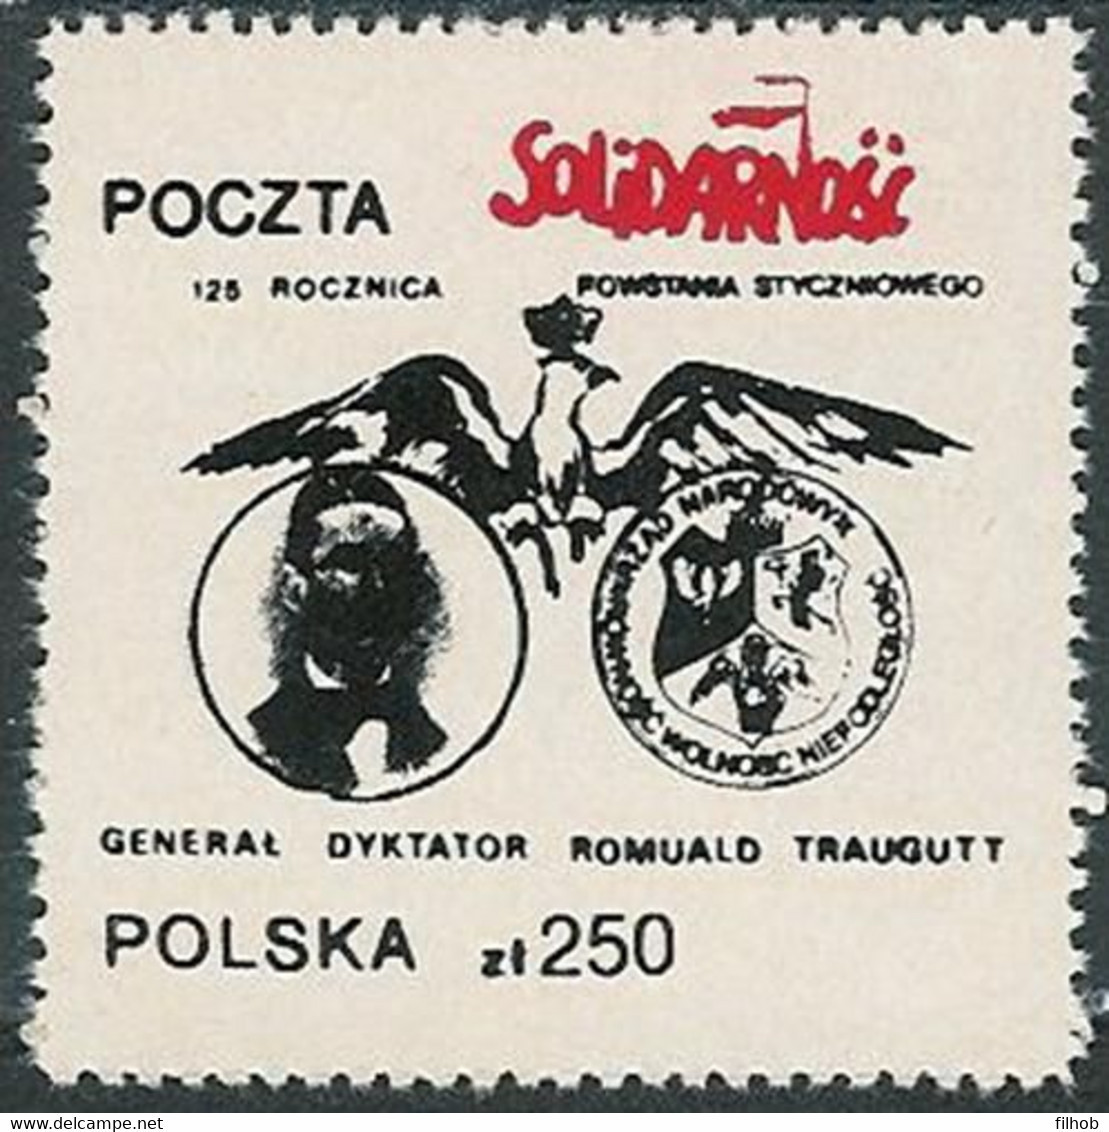 Poland SOLIDARITY (S093): January Uprising Romuald Traugutt - Solidarnosc Labels